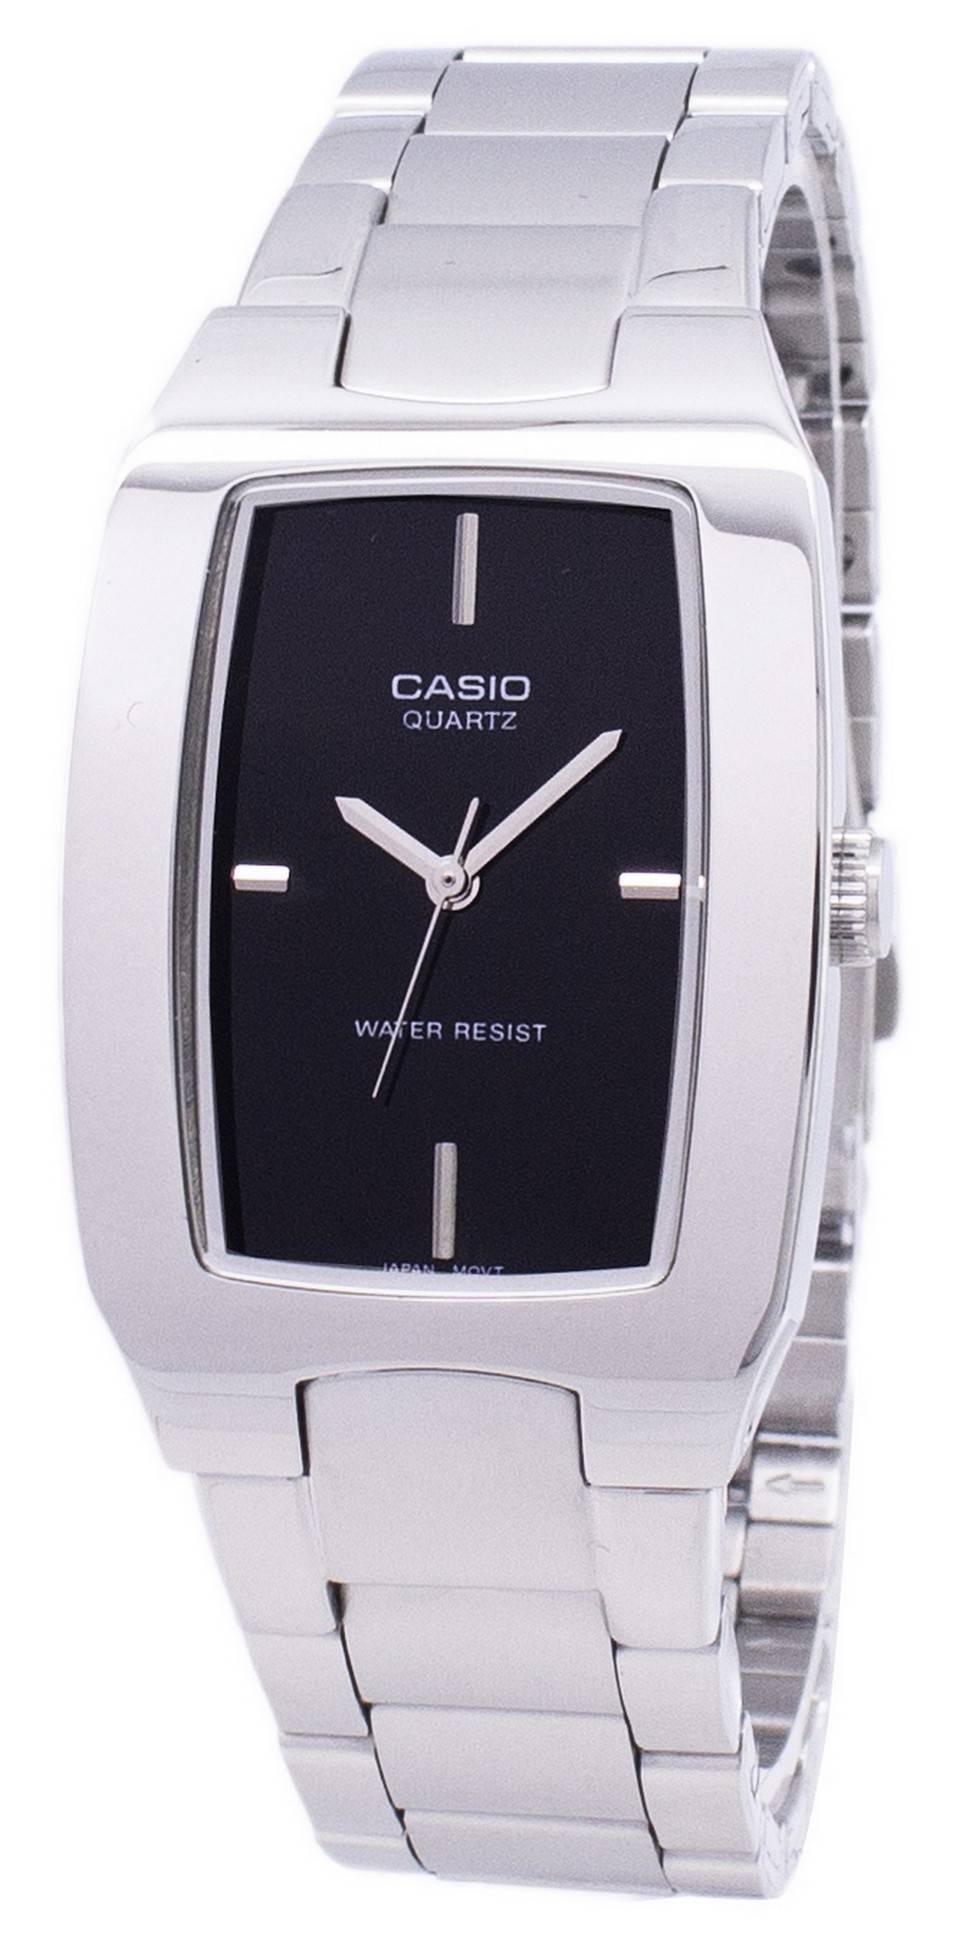 Casio Men's Quartz Watch Quartz Mineral Crystal MTP-1165A-1C - image 1 of 3